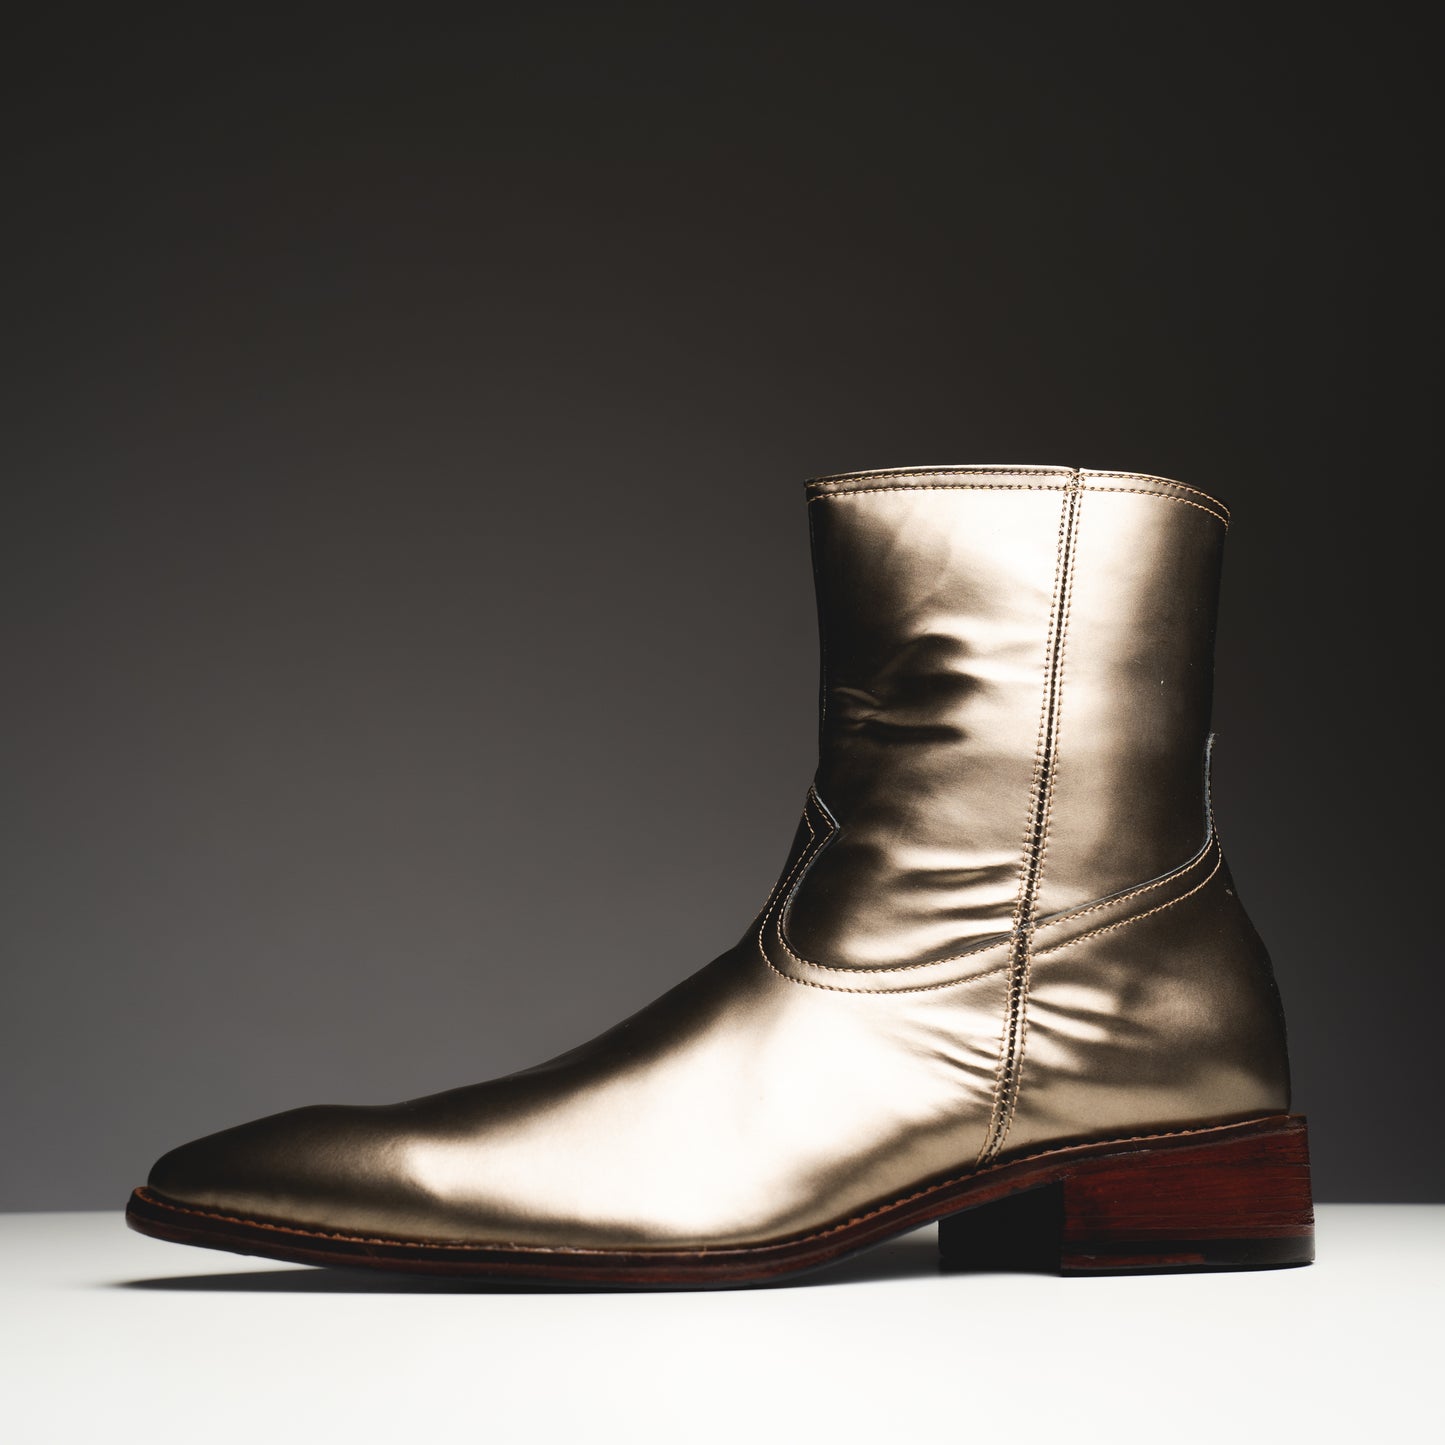 Metallic boots